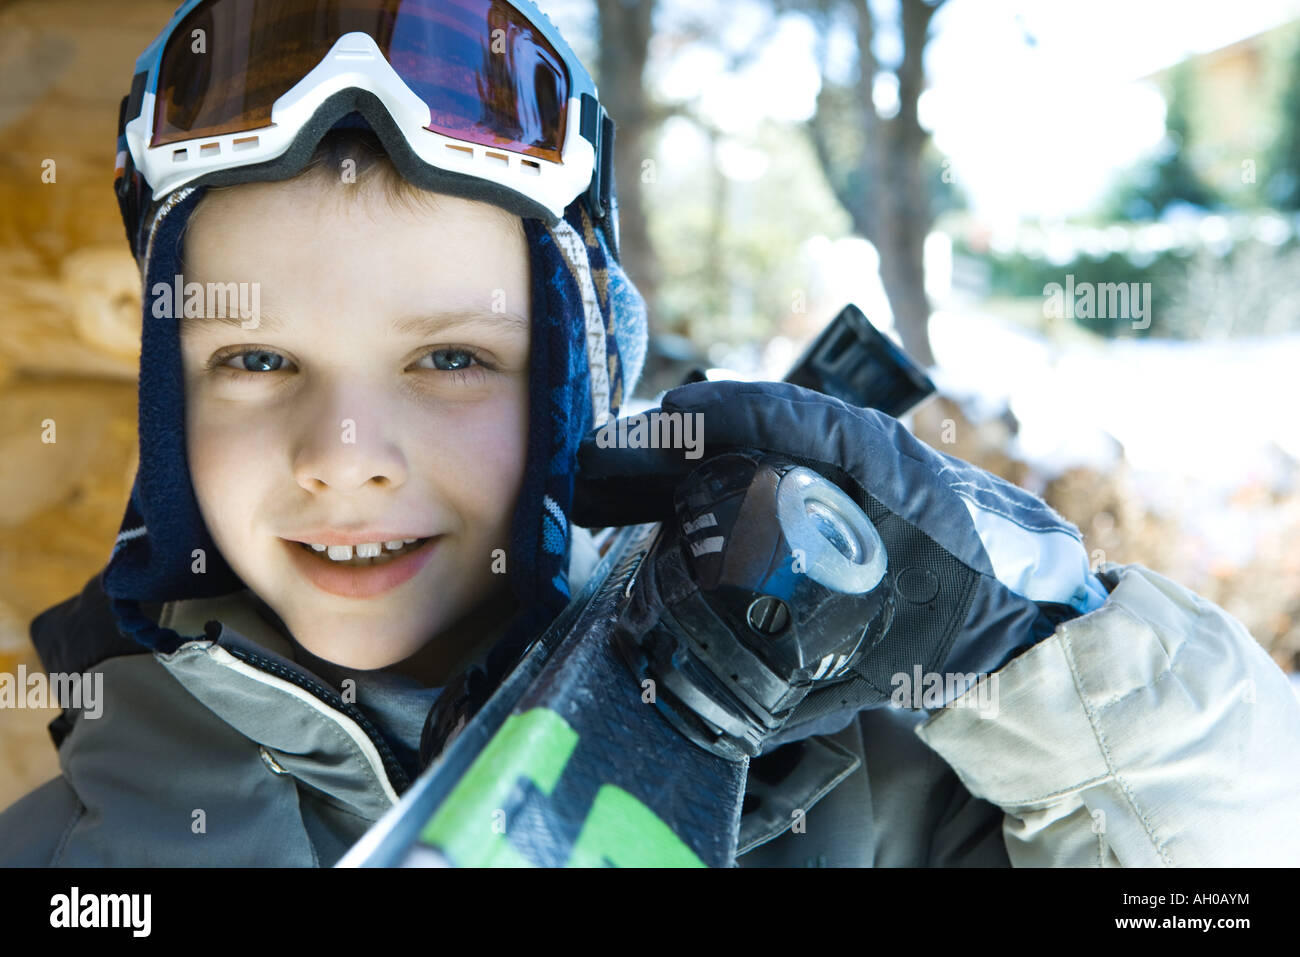 Boy holding skis on shoulder, portrait Stock Photo - Alamy